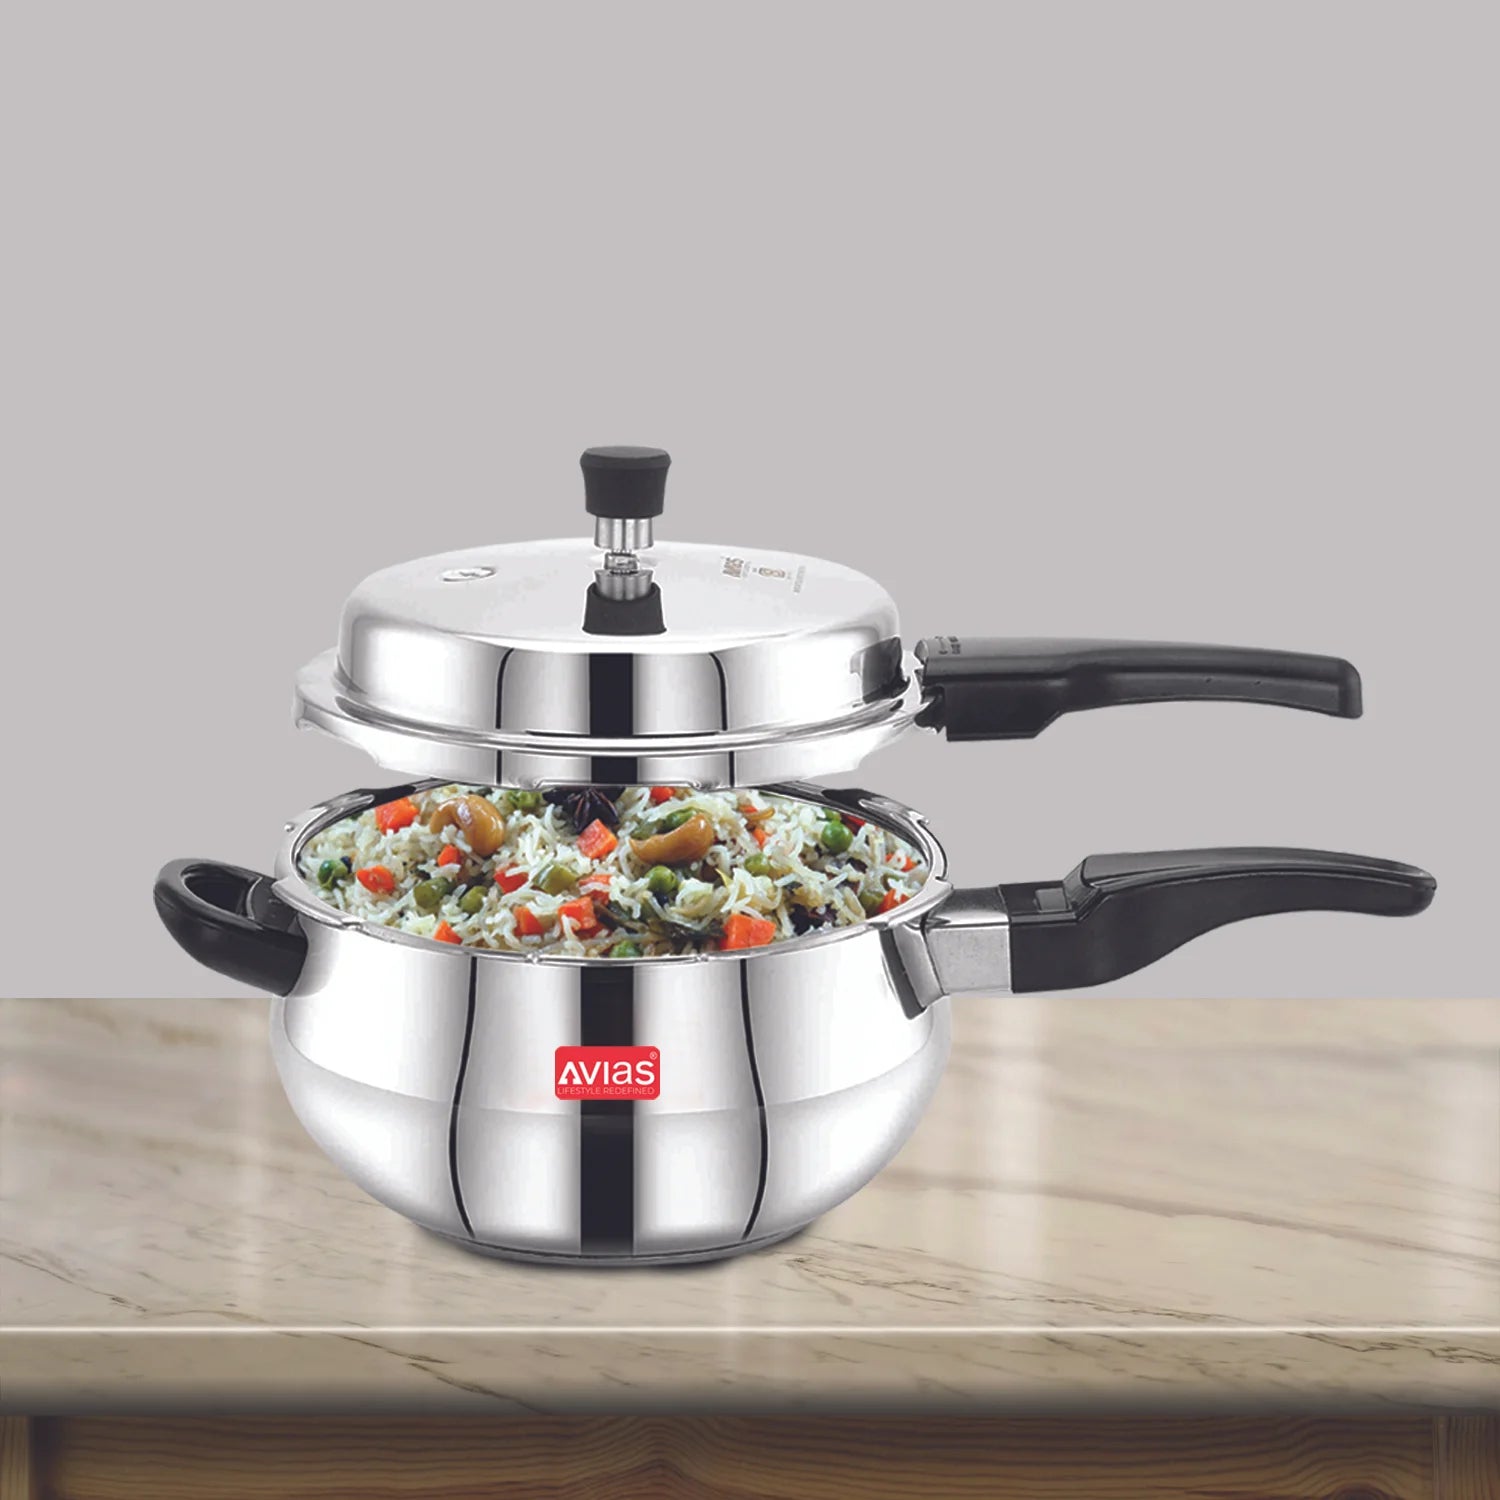 AVIAS Avanti Handi high-quality stainless steel pressure cooker